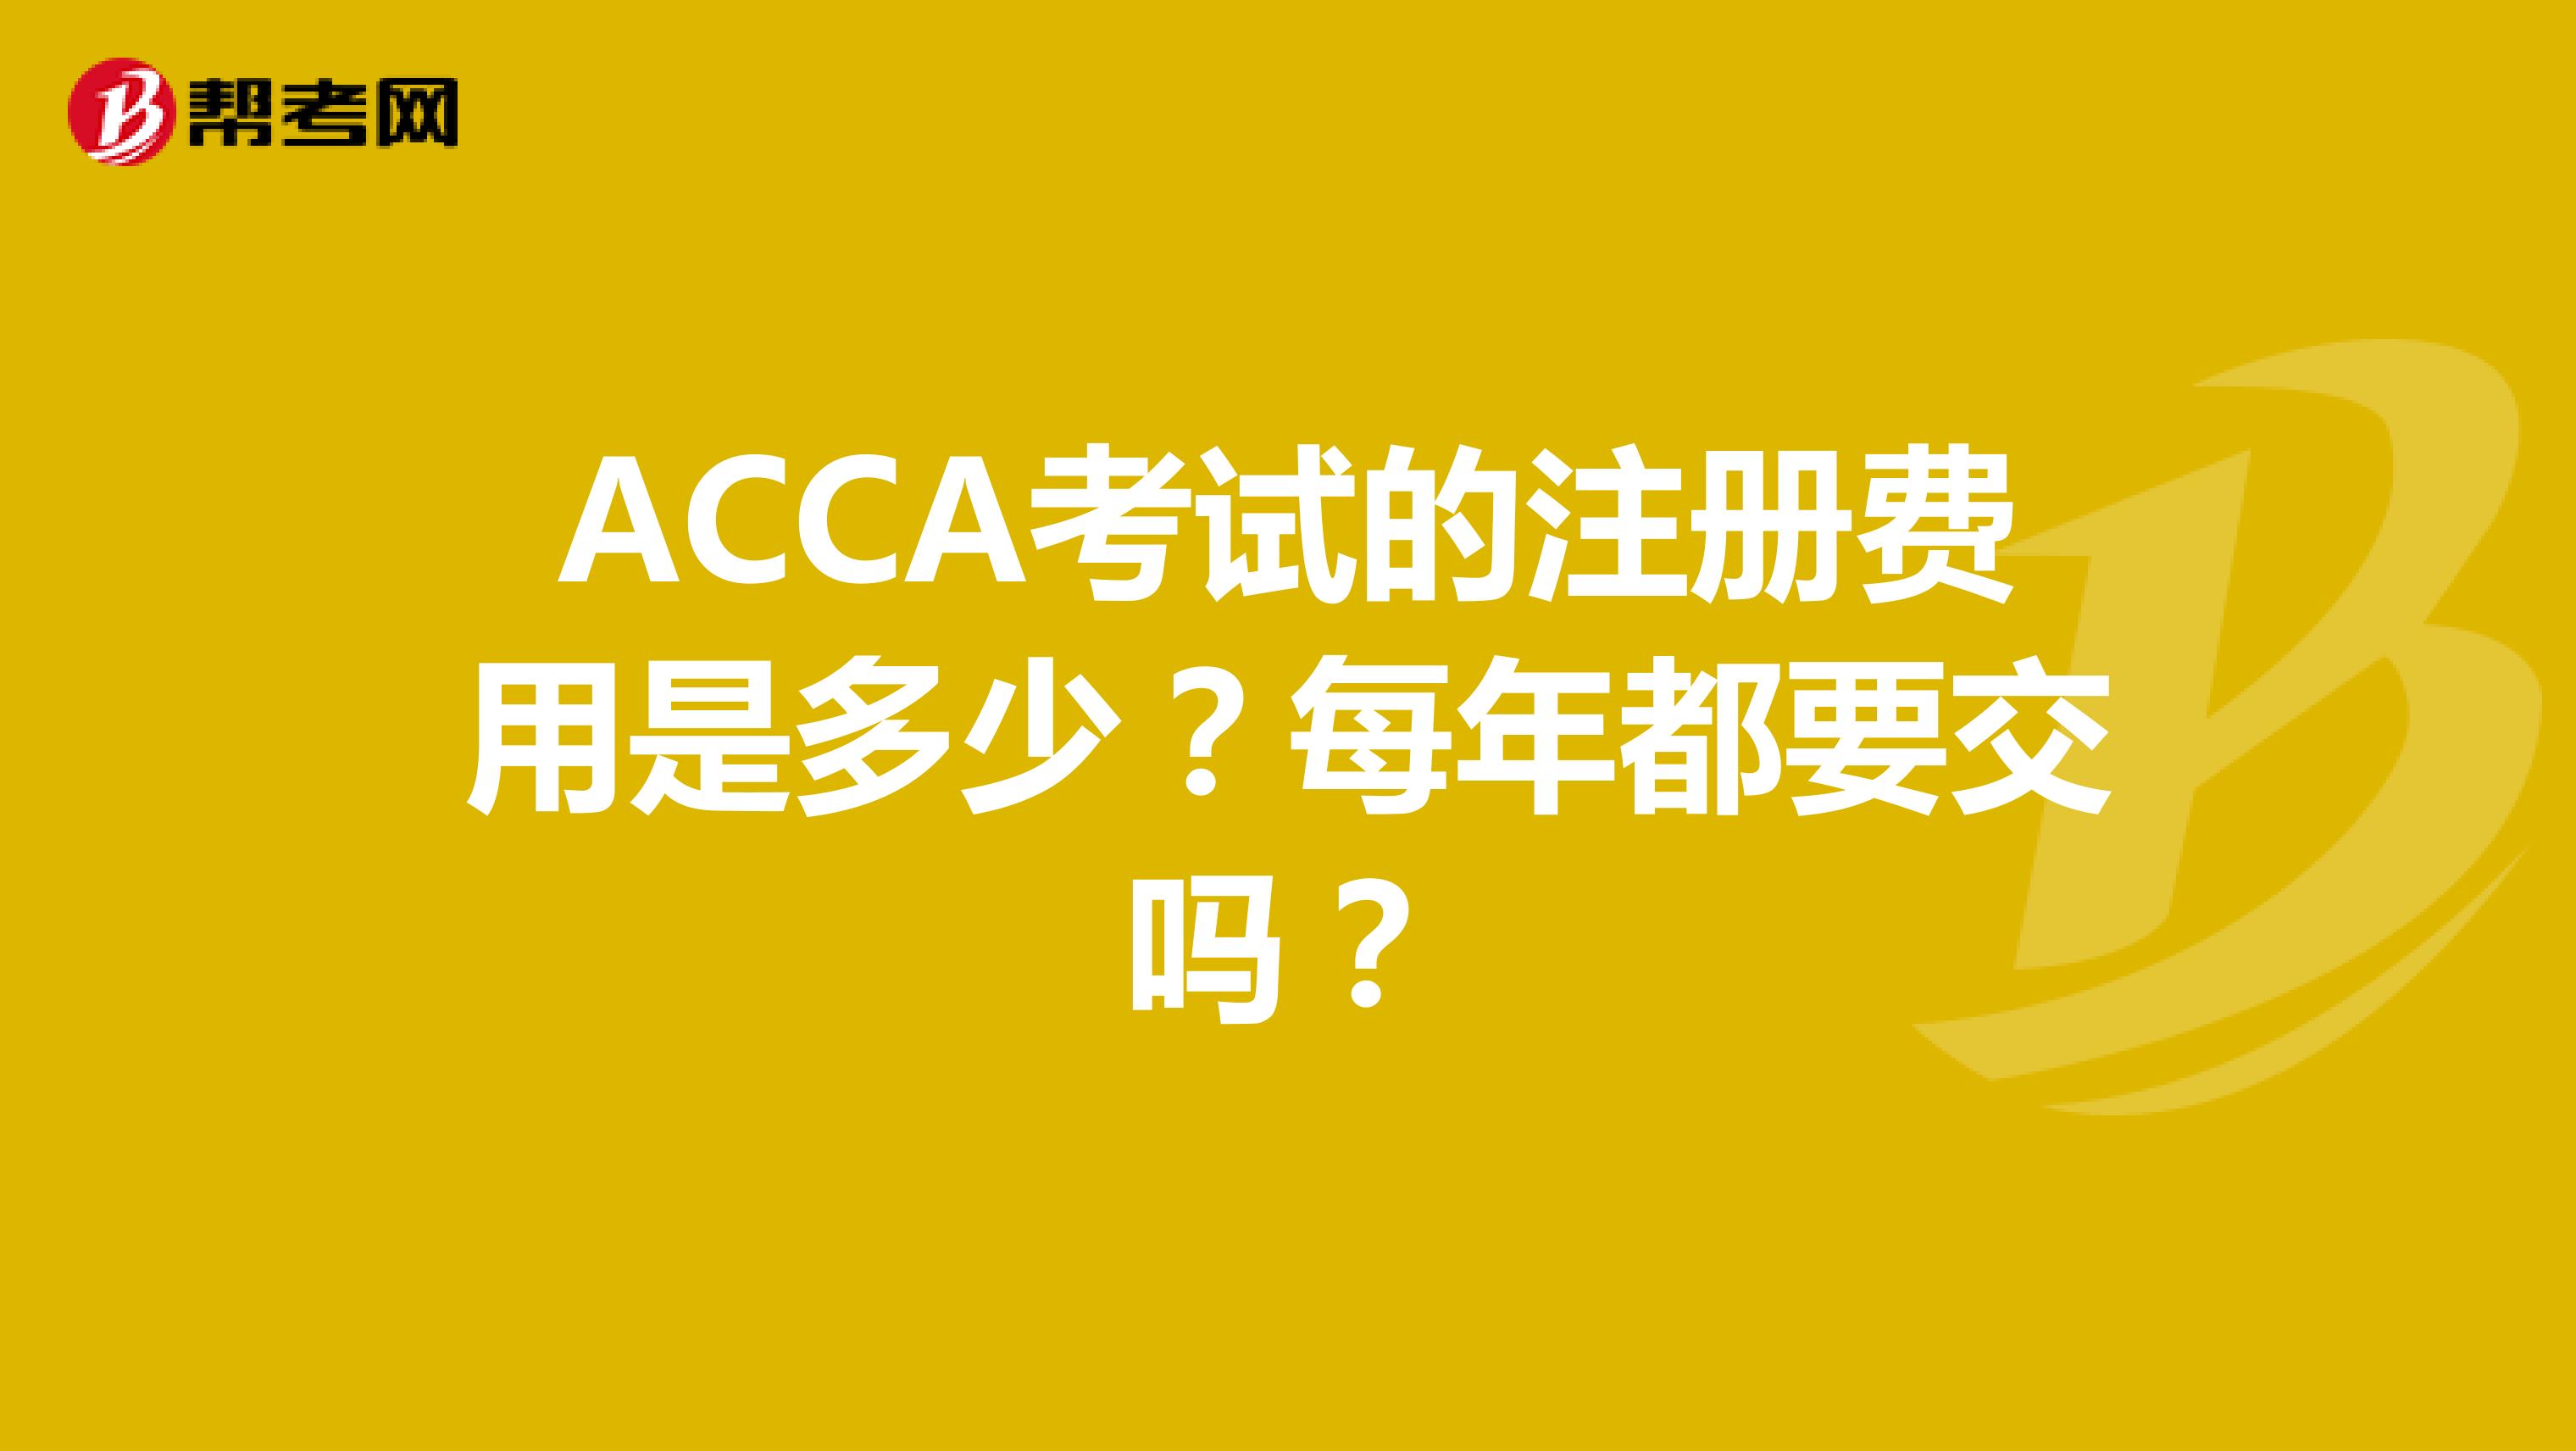 ACCA考试的注册费用是多少？每年都要交吗？